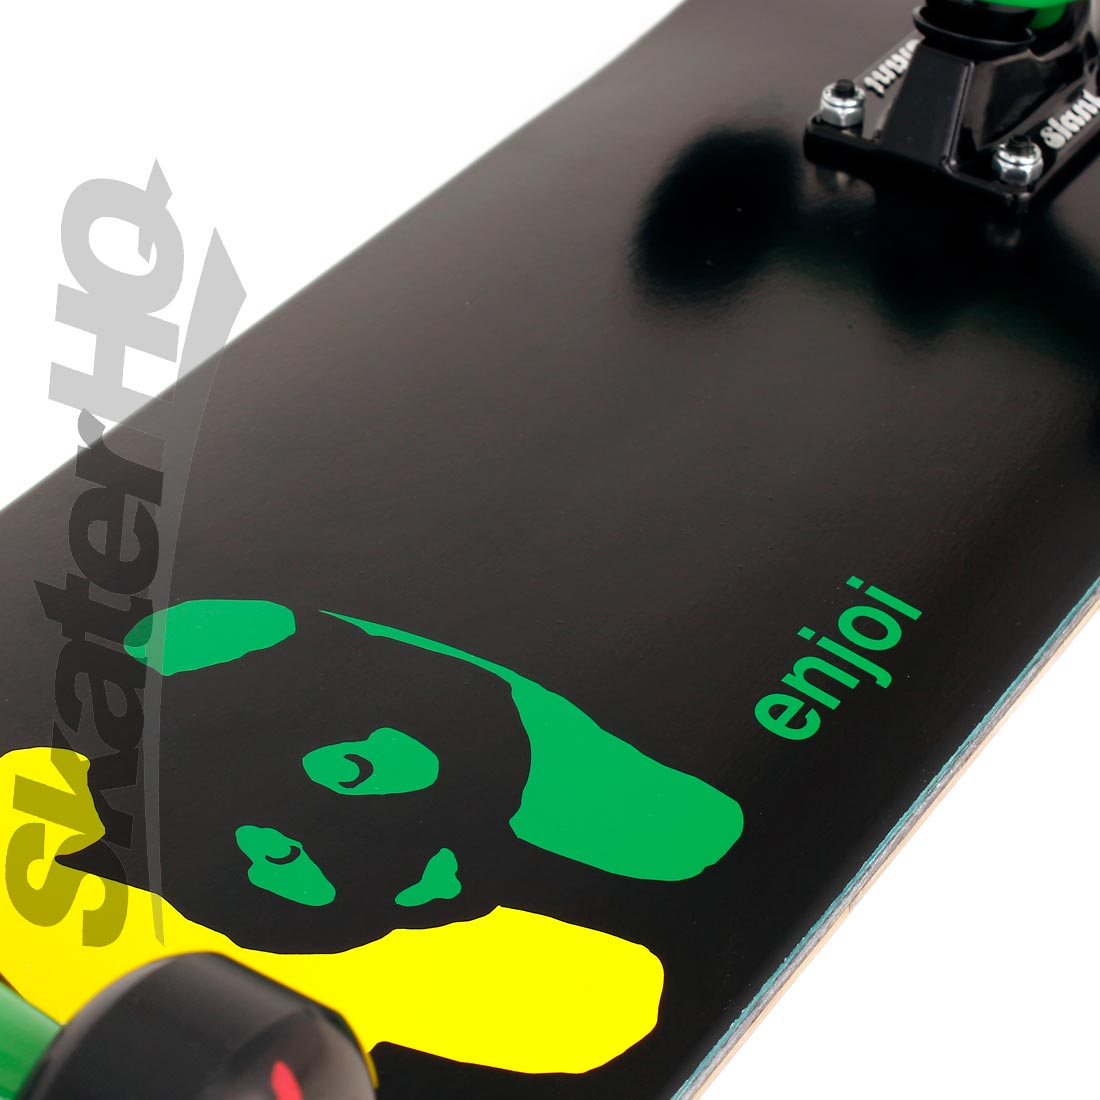 Enjoi Rasta Panda Black 7.0 Mini Complete Skateboard Completes Modern Street